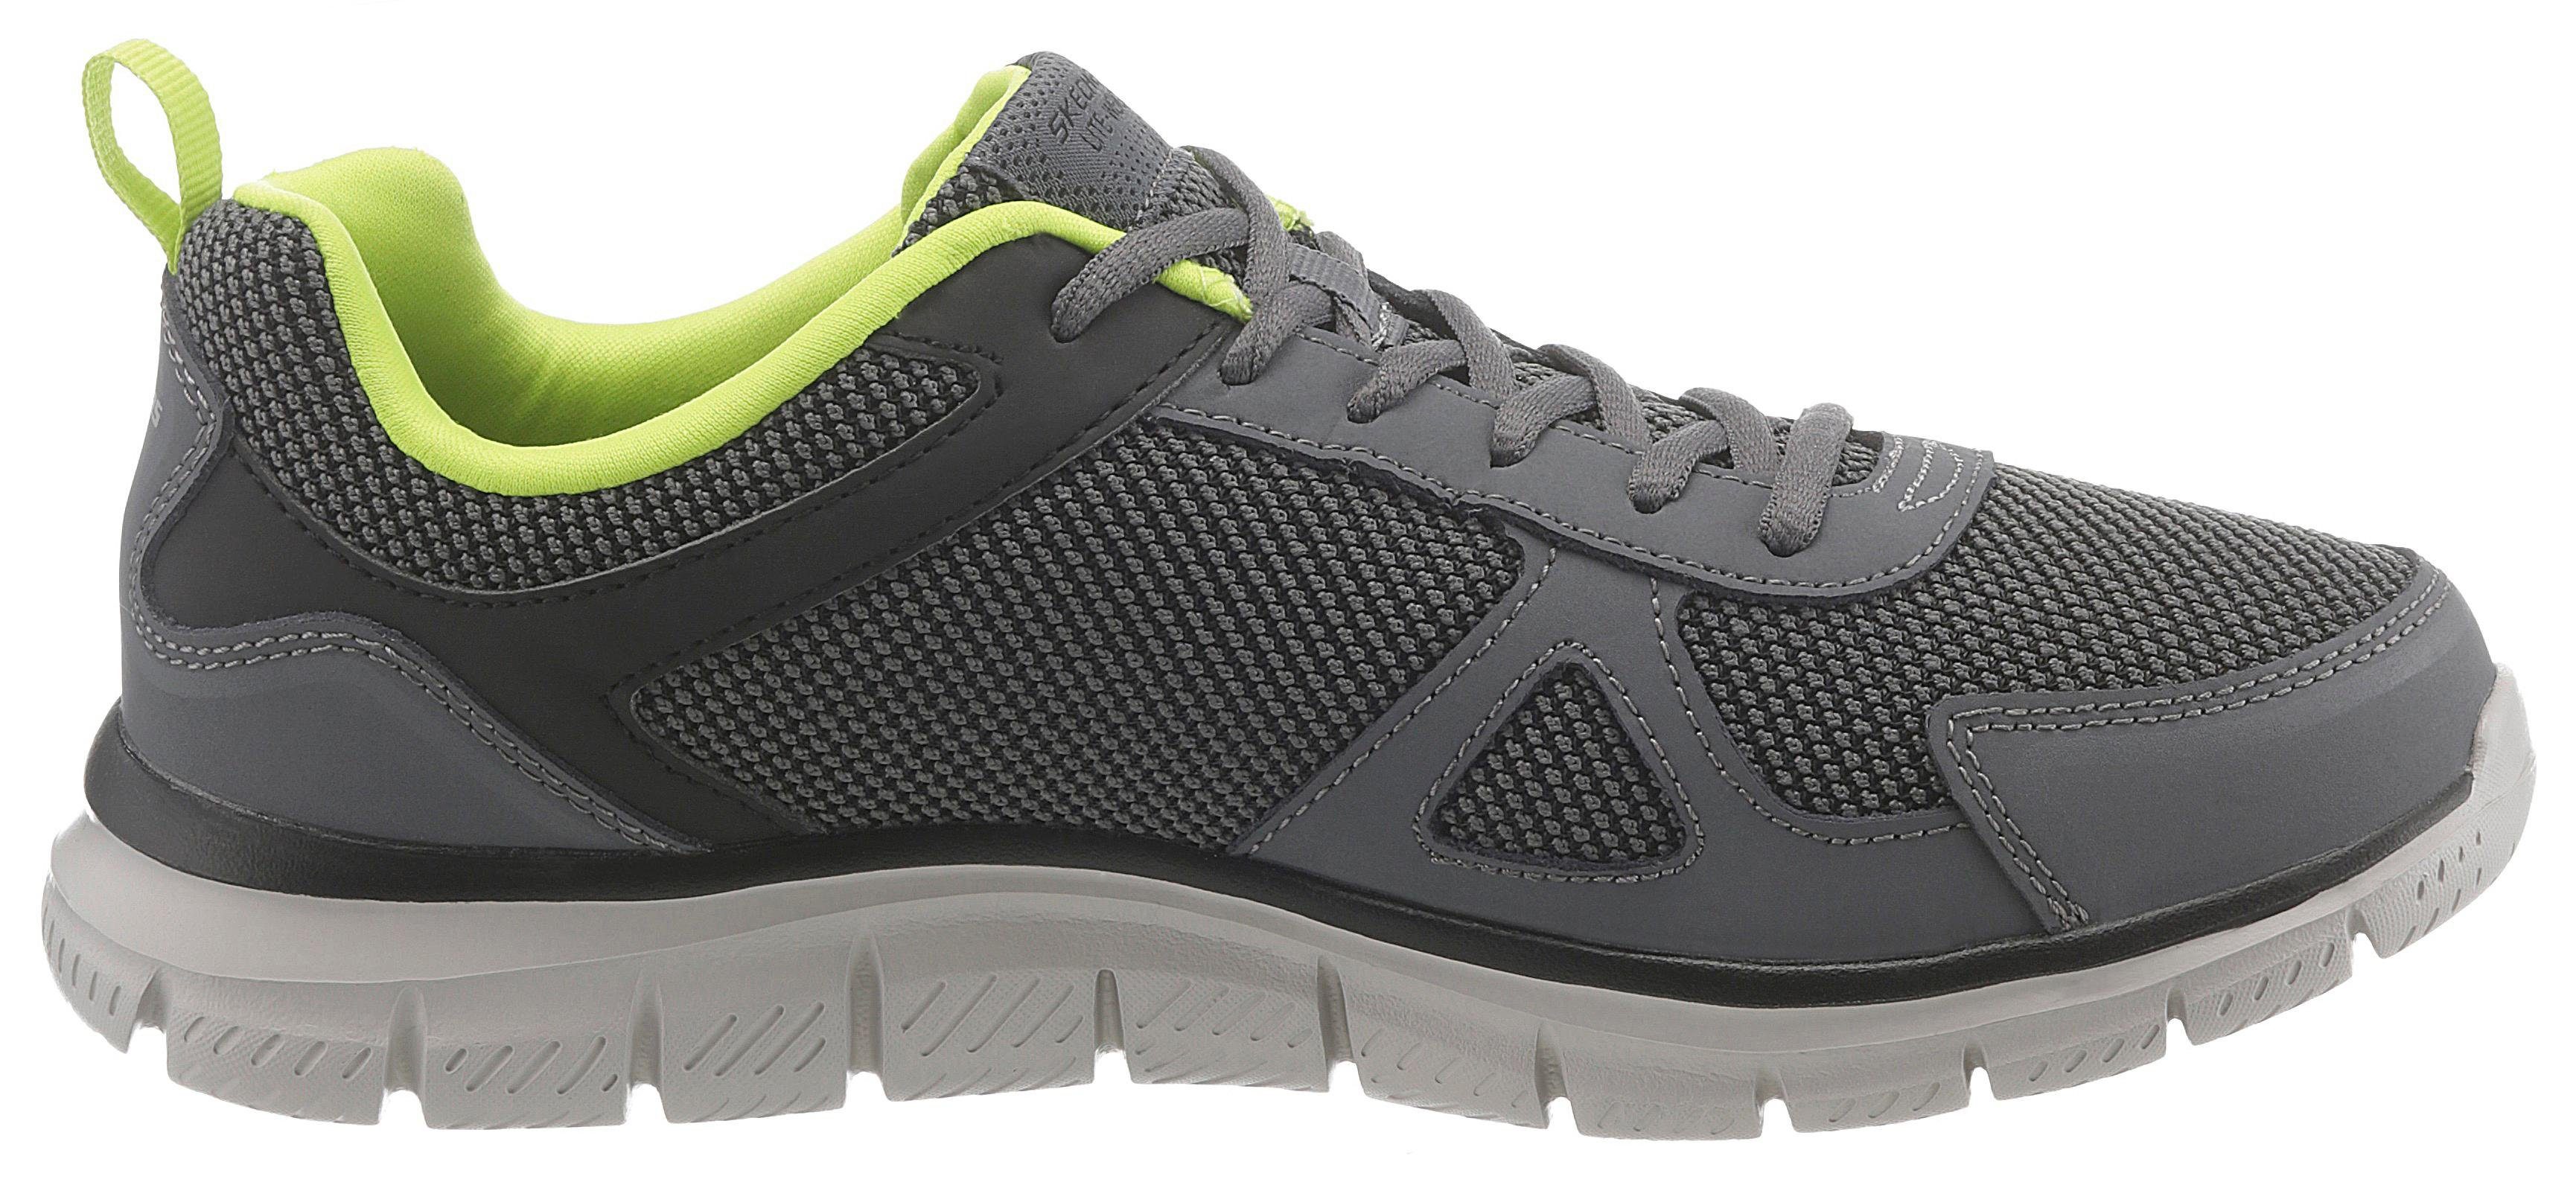 Track - mit Grau-Schwarz-Grün Sneaker Logo seitlichem CCLM / Skechers Charcoal-Black-Lime